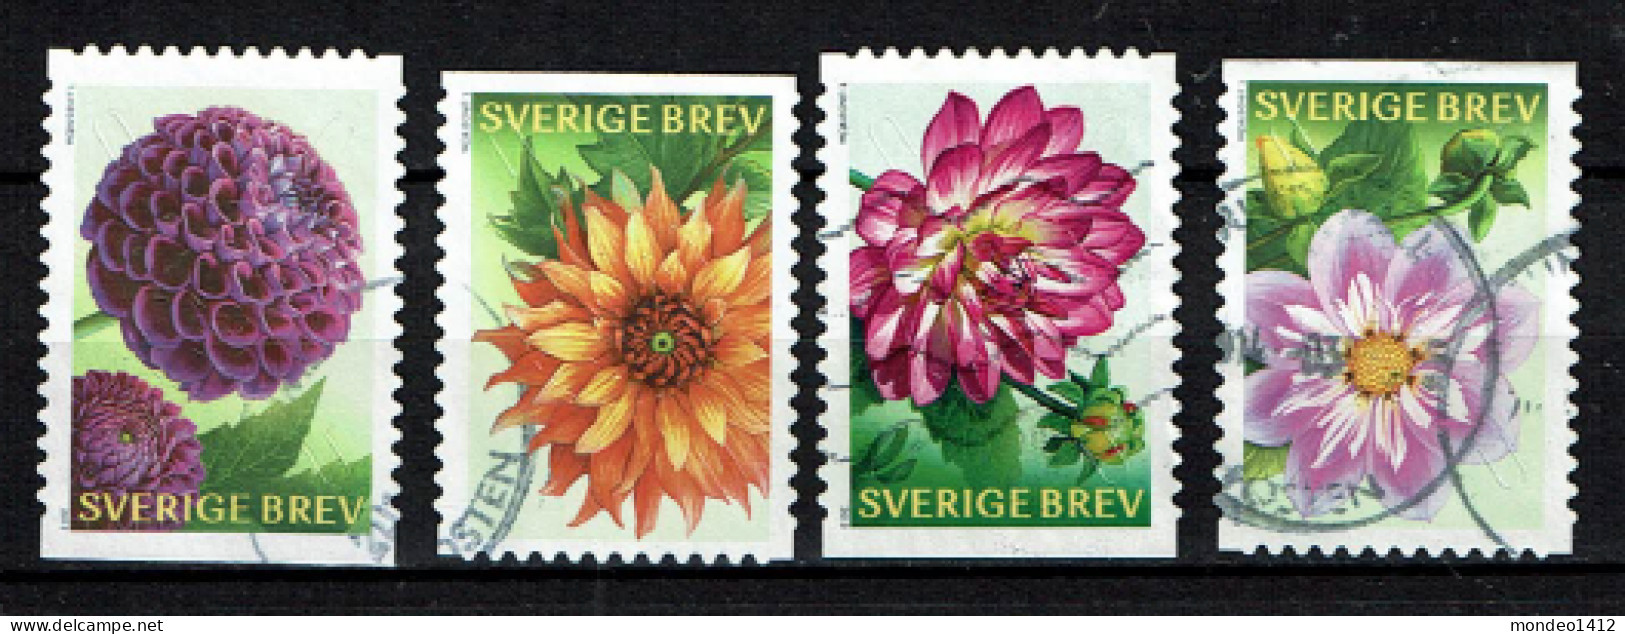 Sweden 2013 - Flora, Bloemen, Flowers, Fleurs, Dahlias - Used - Used Stamps